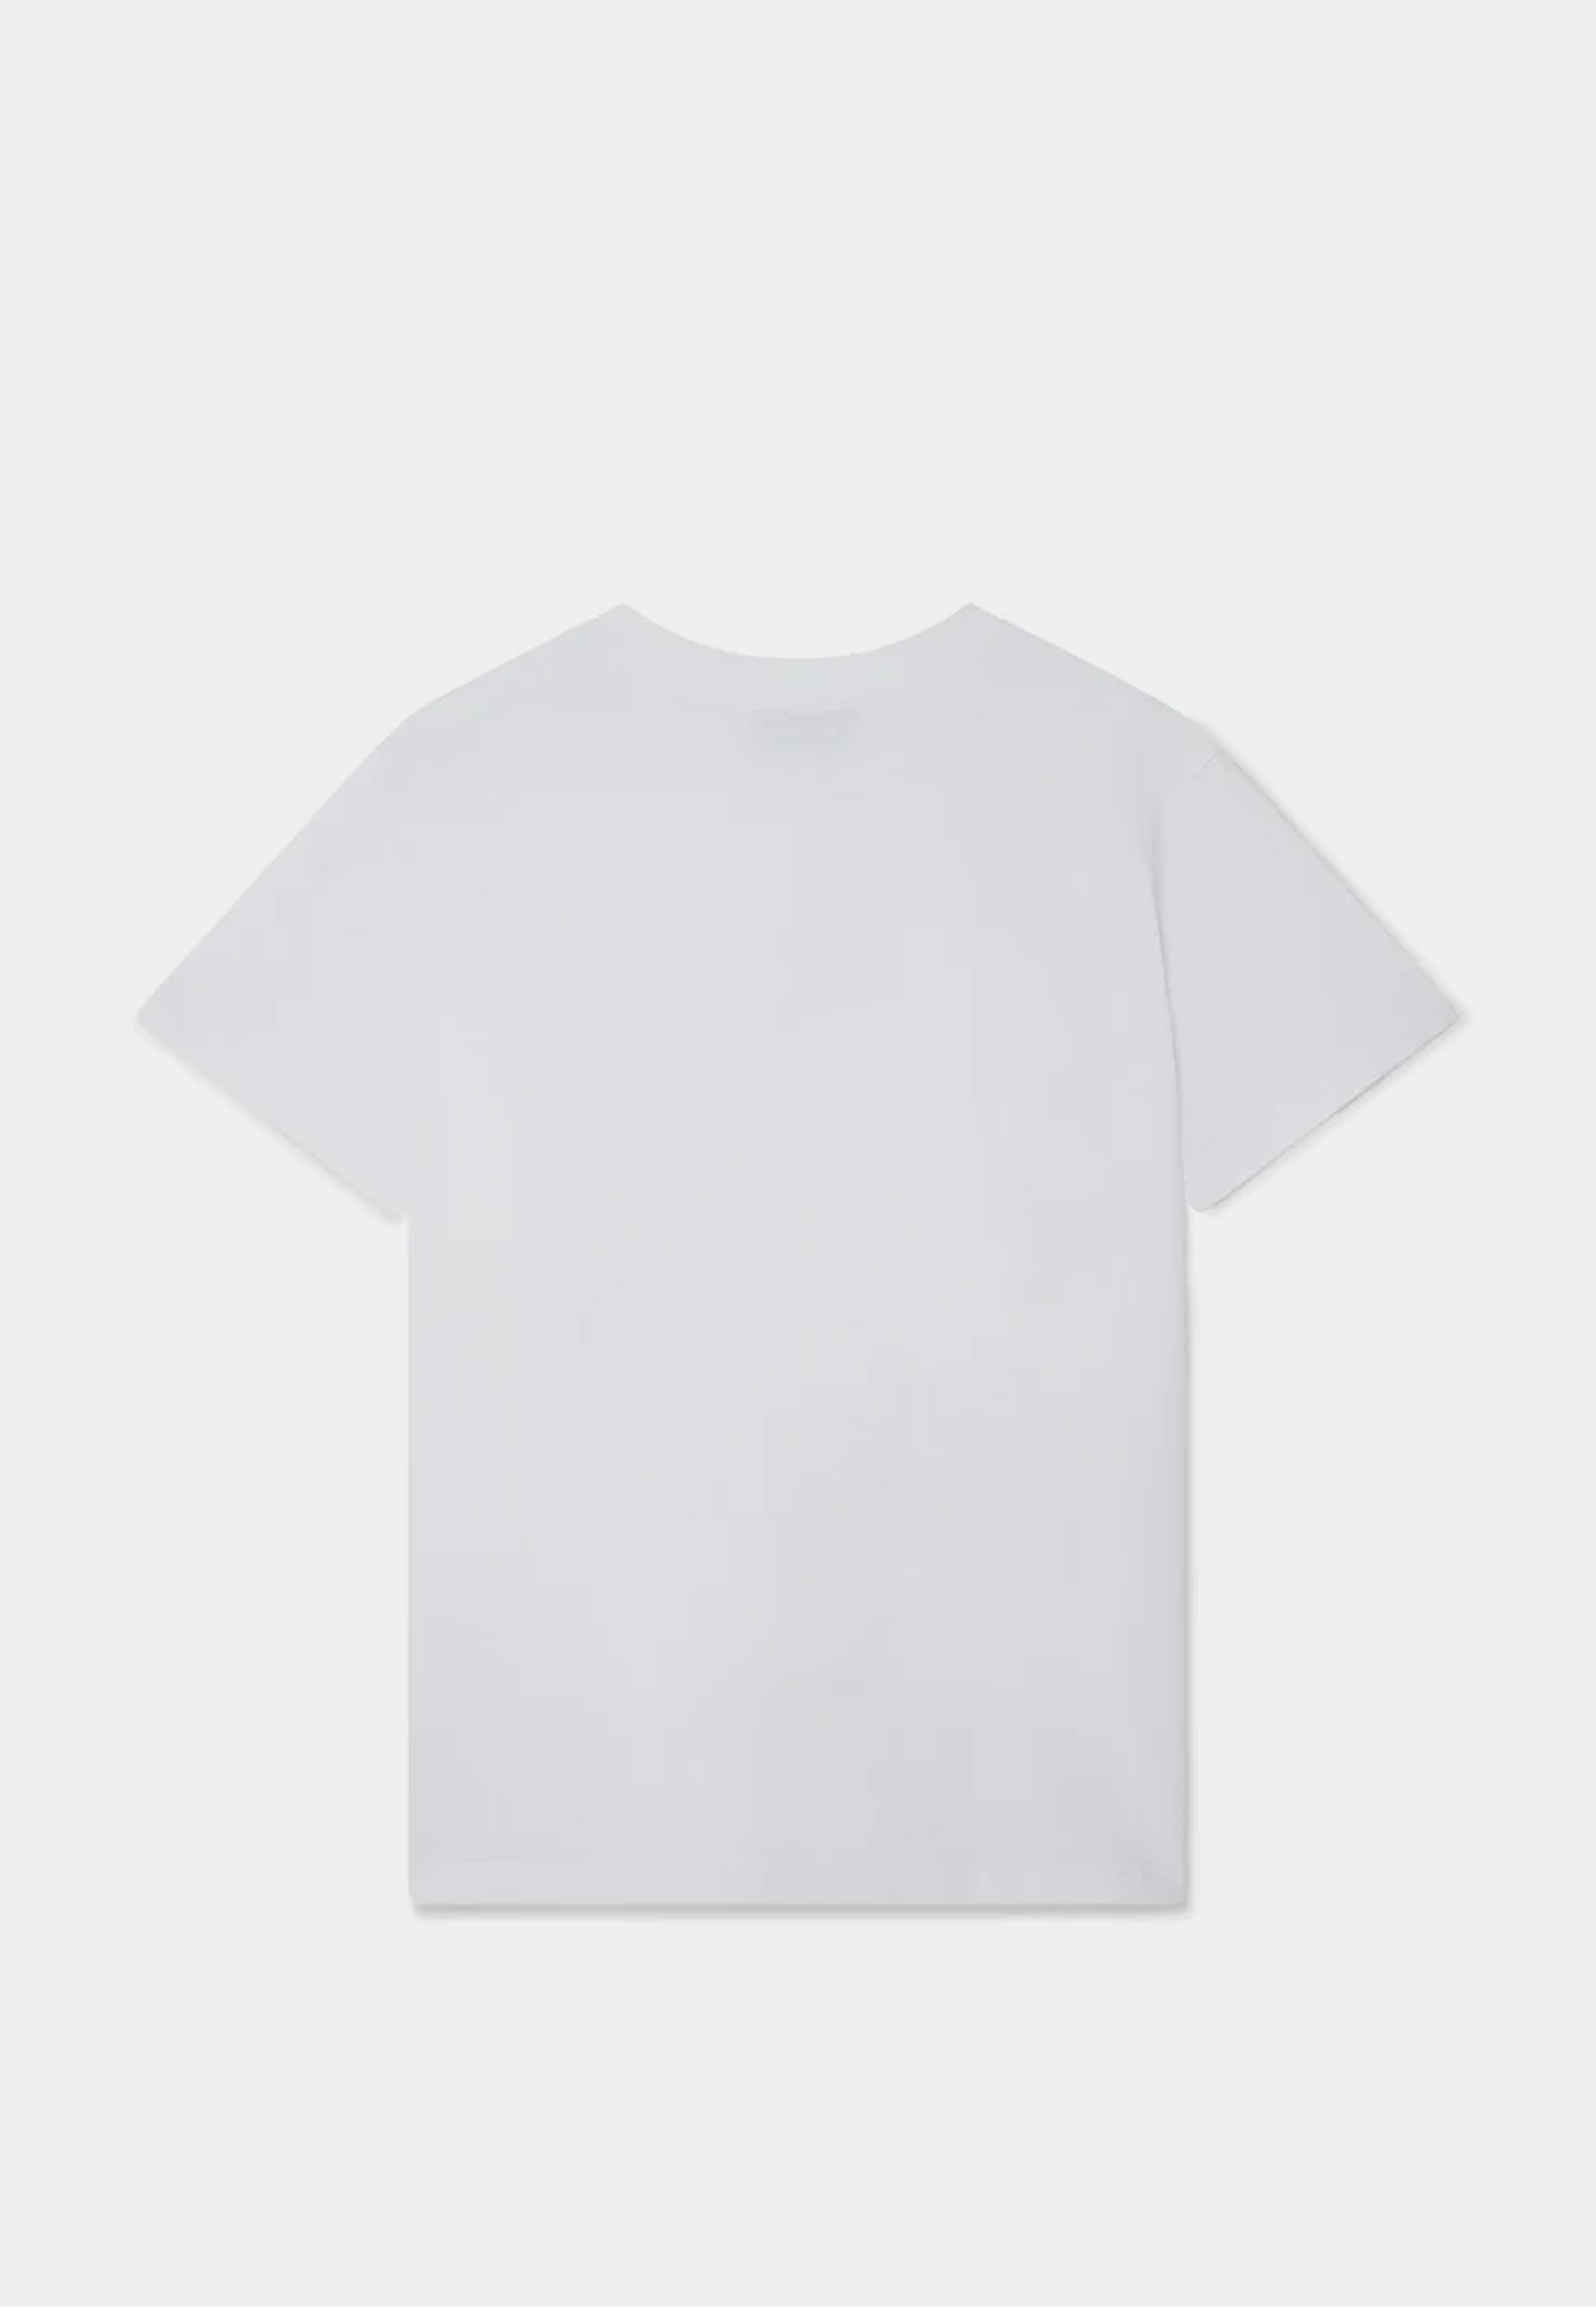 Casablanca Tennis Club Icon Screen Printed Unisex T-Shirt White